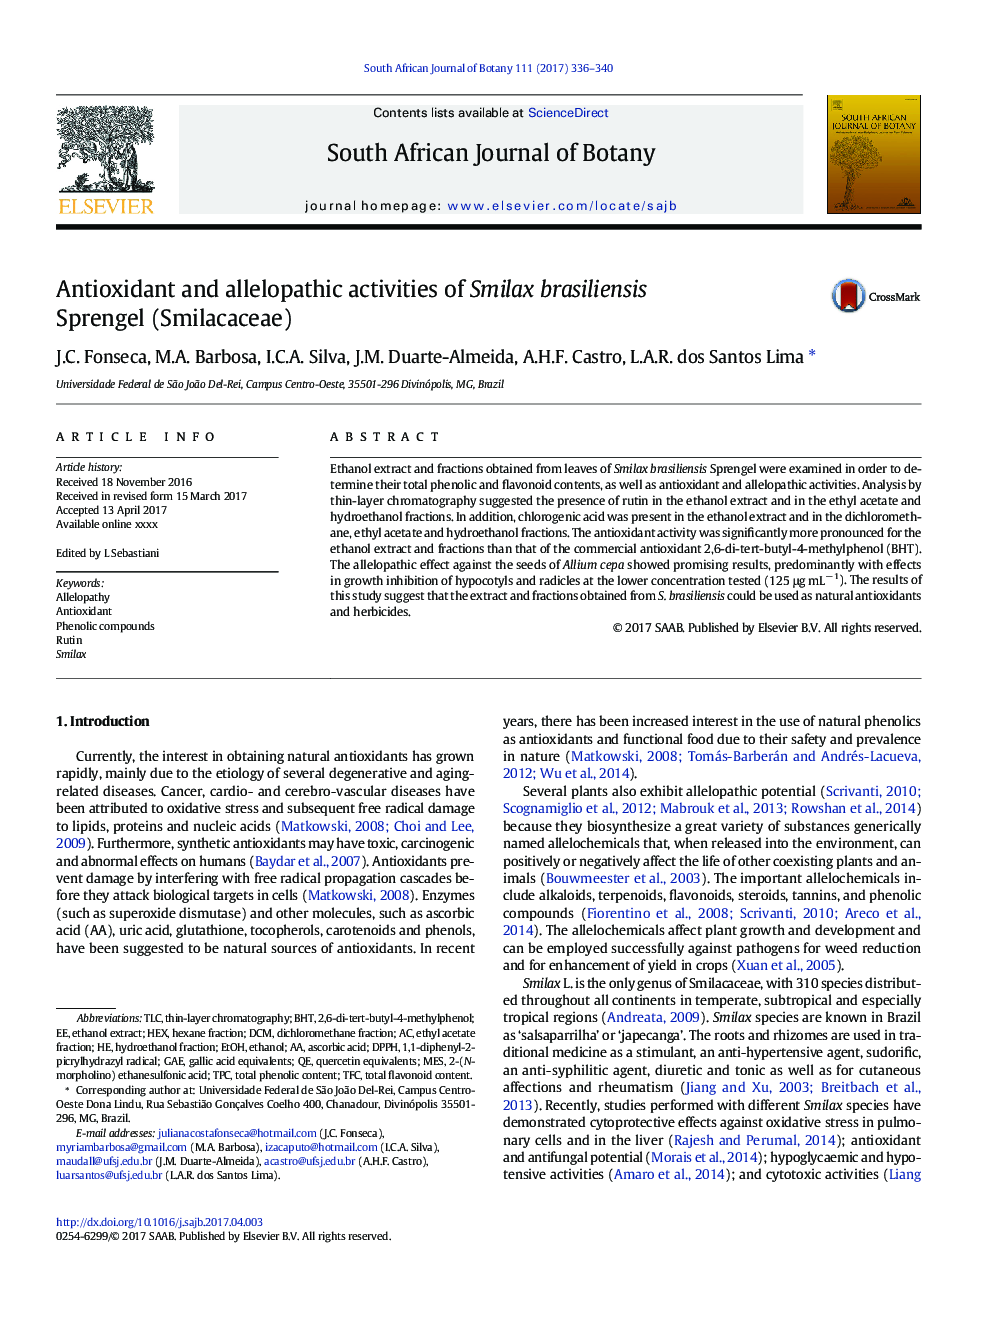 Antioxidant and allelopathic activities of Smilax brasiliensis Sprengel (Smilacaceae)